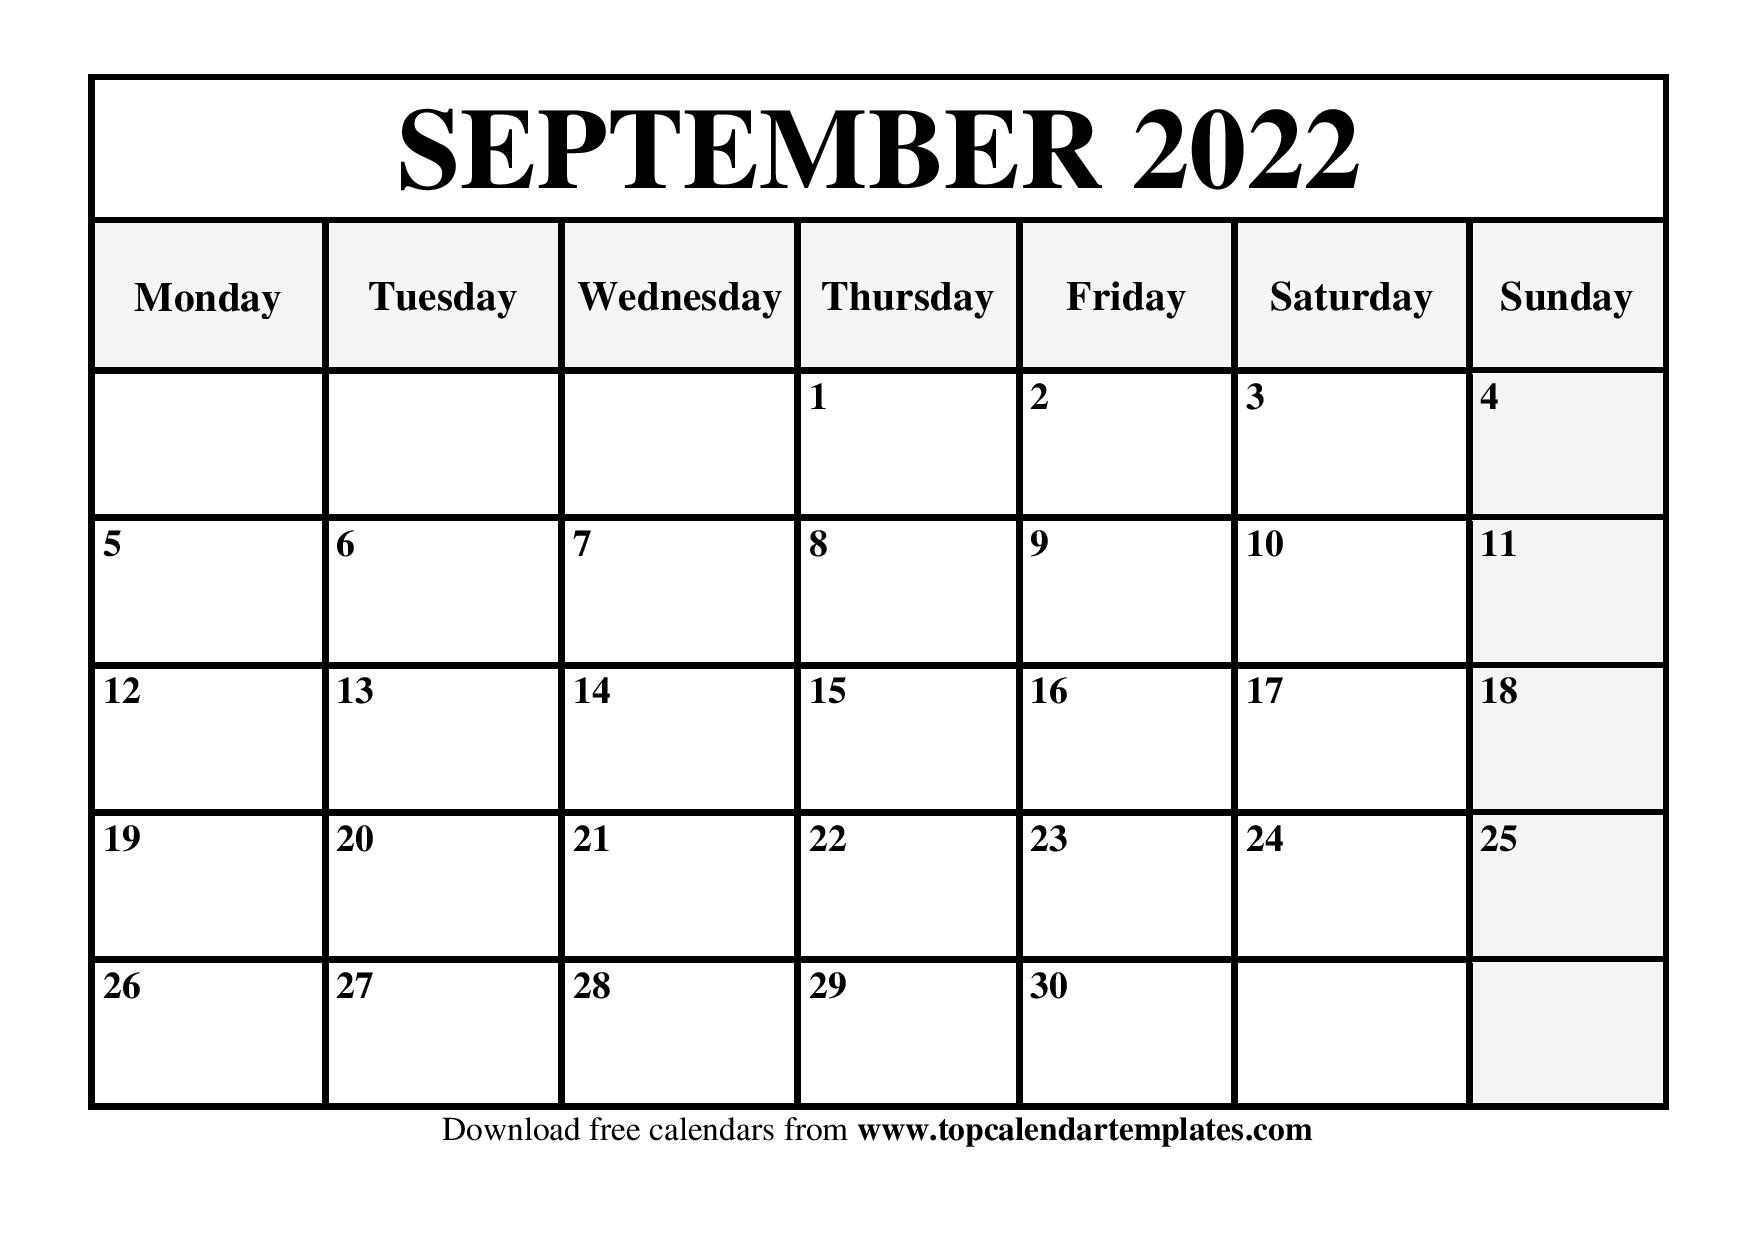 Sept 2022 Calendar Printable Printable Calendar September 2022 Templates - Pdf, Word, Excel